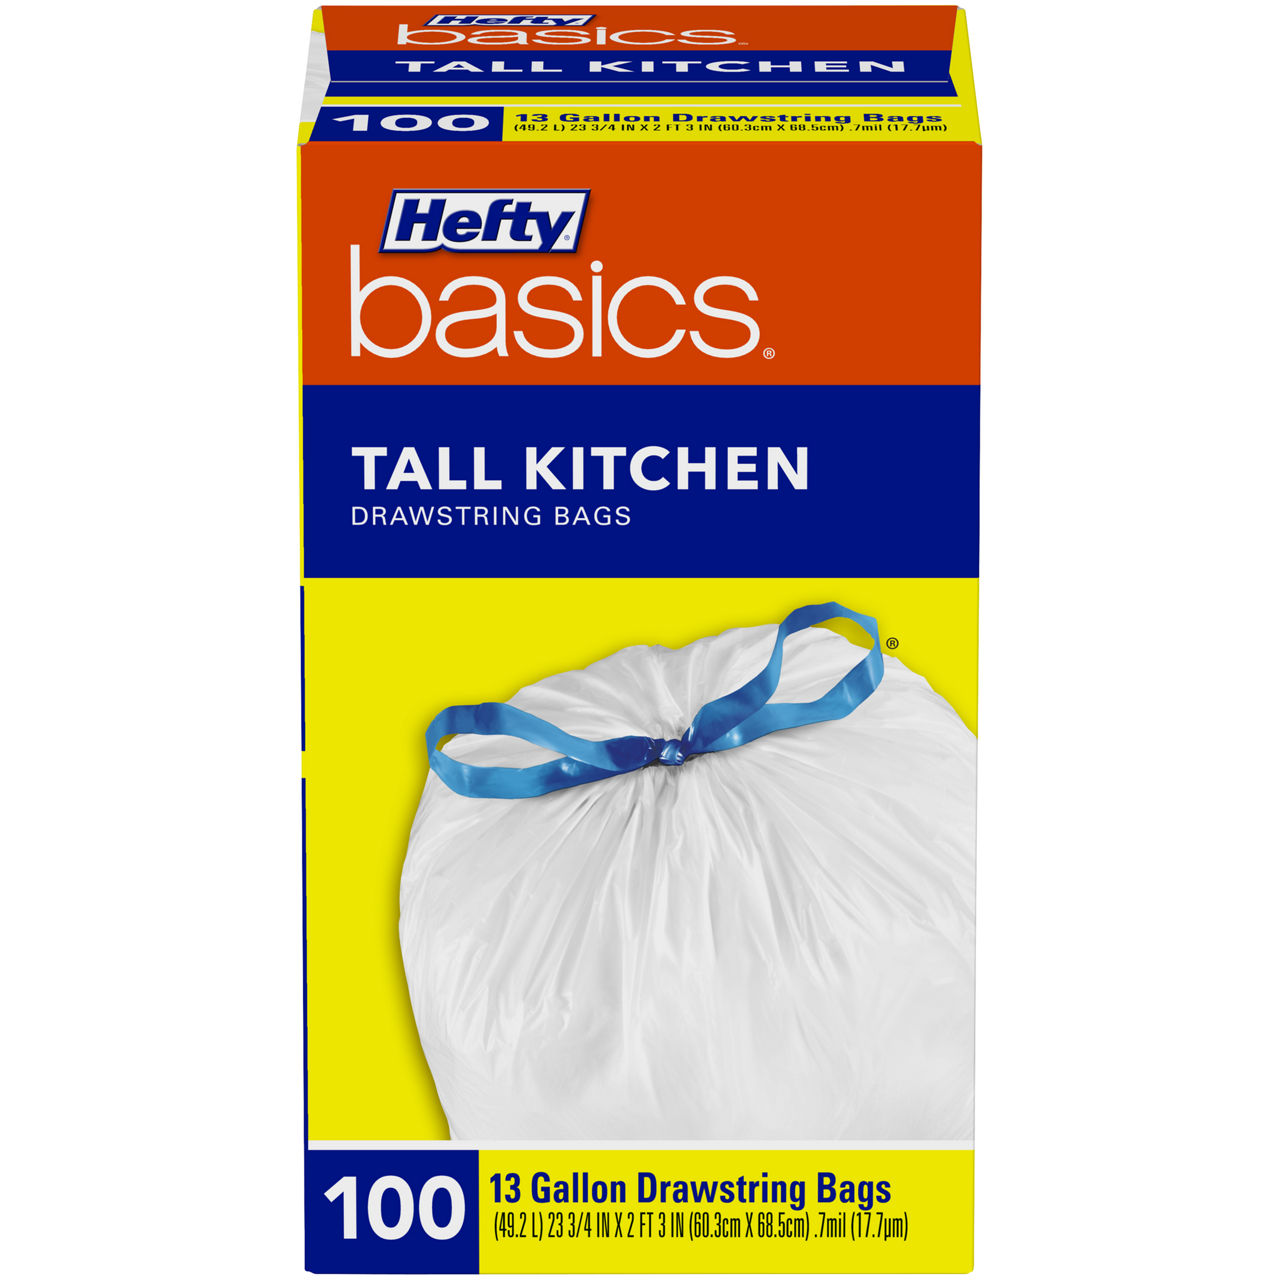 Hefty Basics Hefty Basics 13 Gallon Tall Kitchen Drawstring Bags 100 ct Box